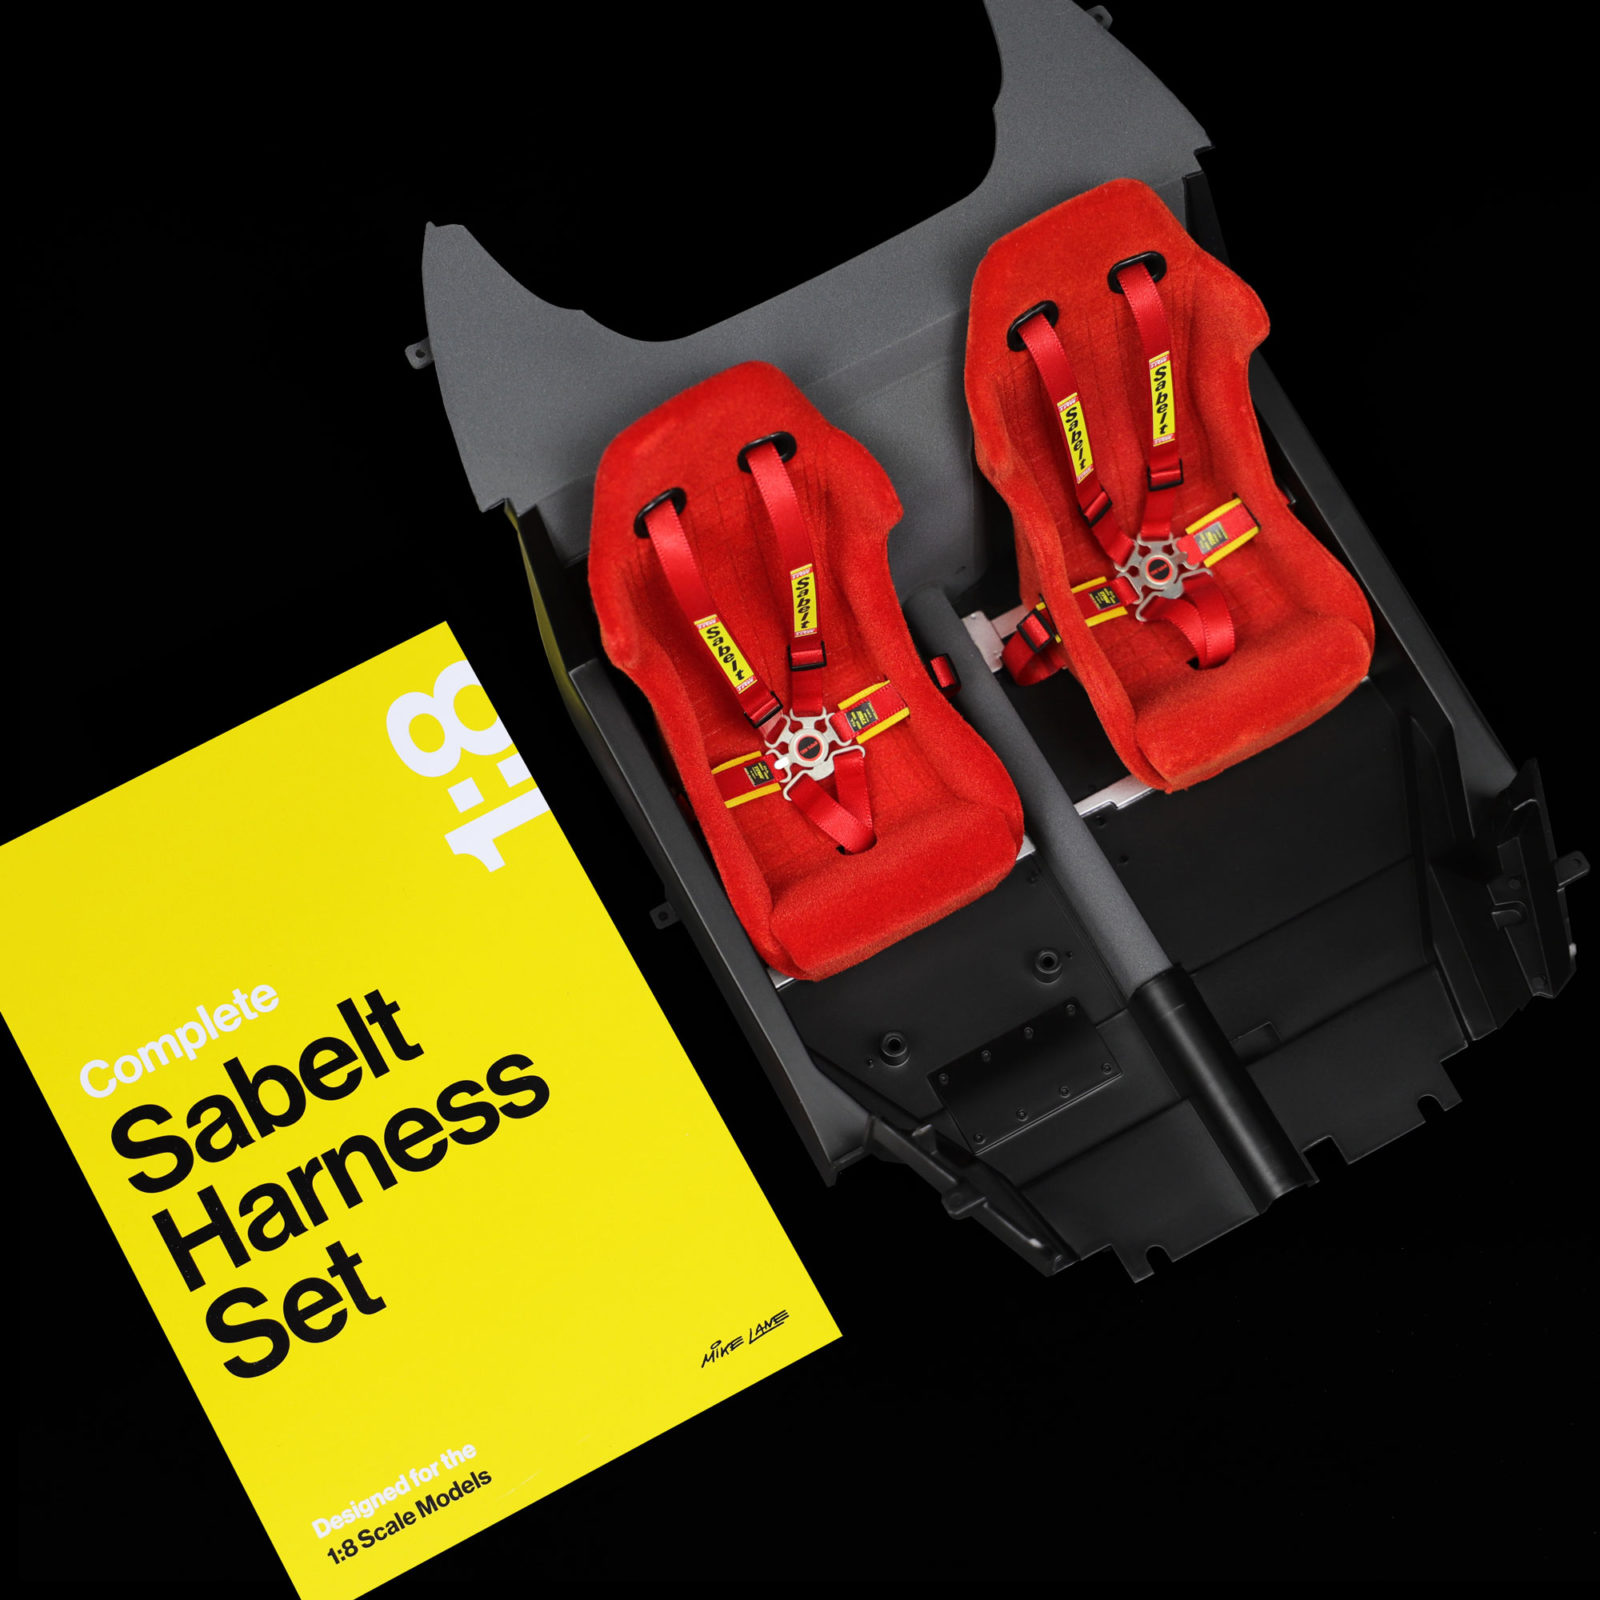 Red Ferrari F40 Sabelt Harness Set installed